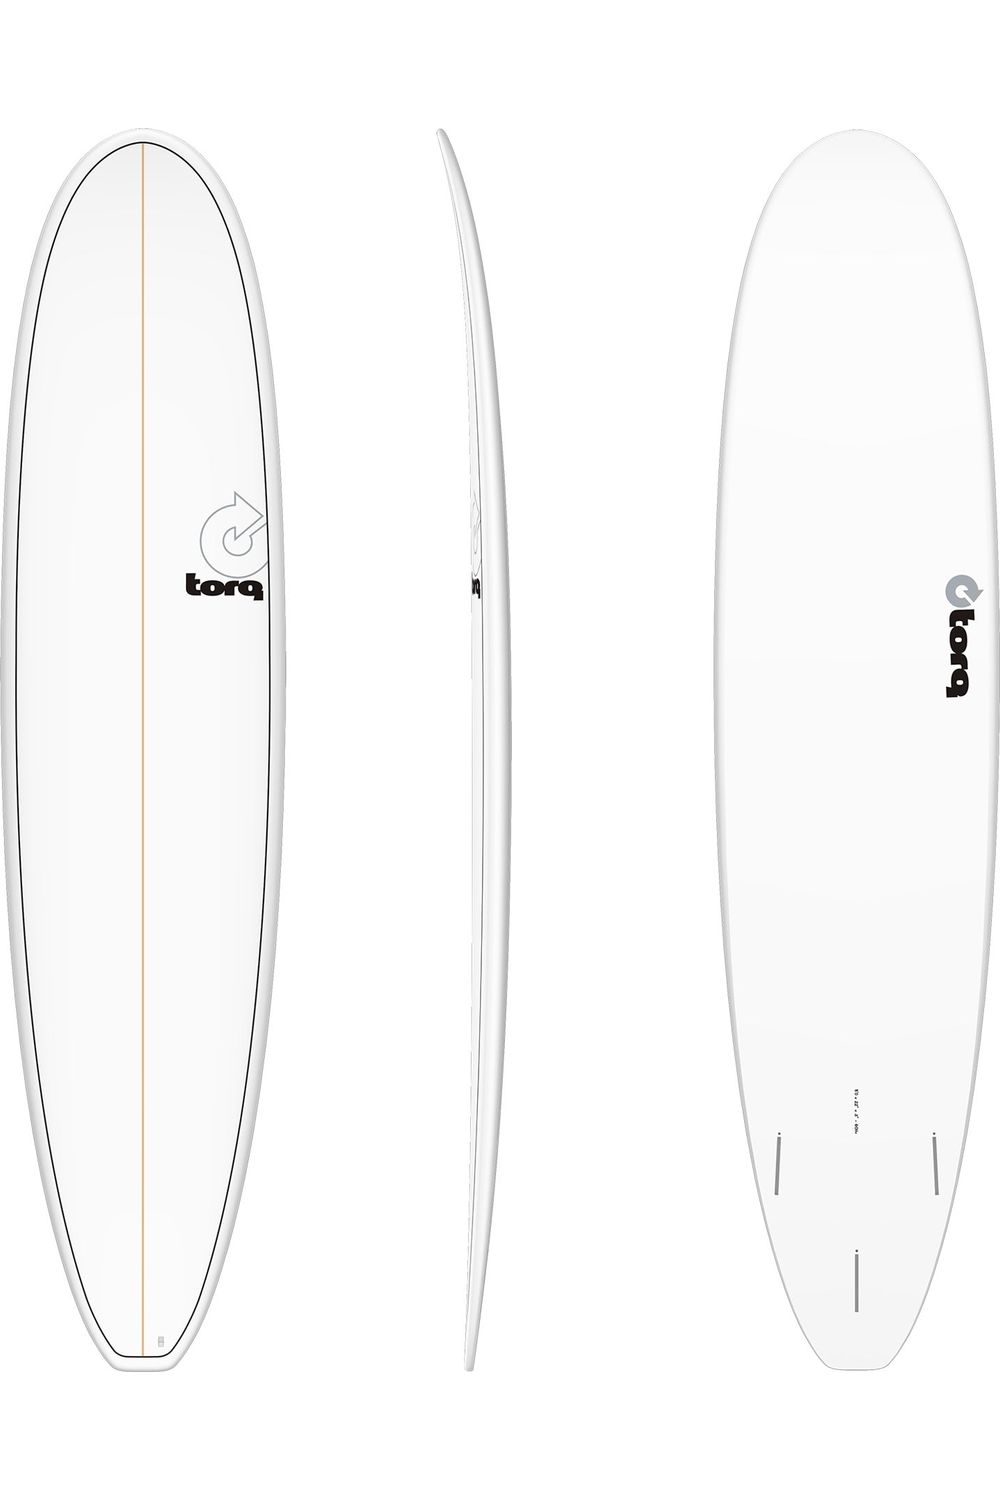 Torq TET Long Surfboard in Pinline White